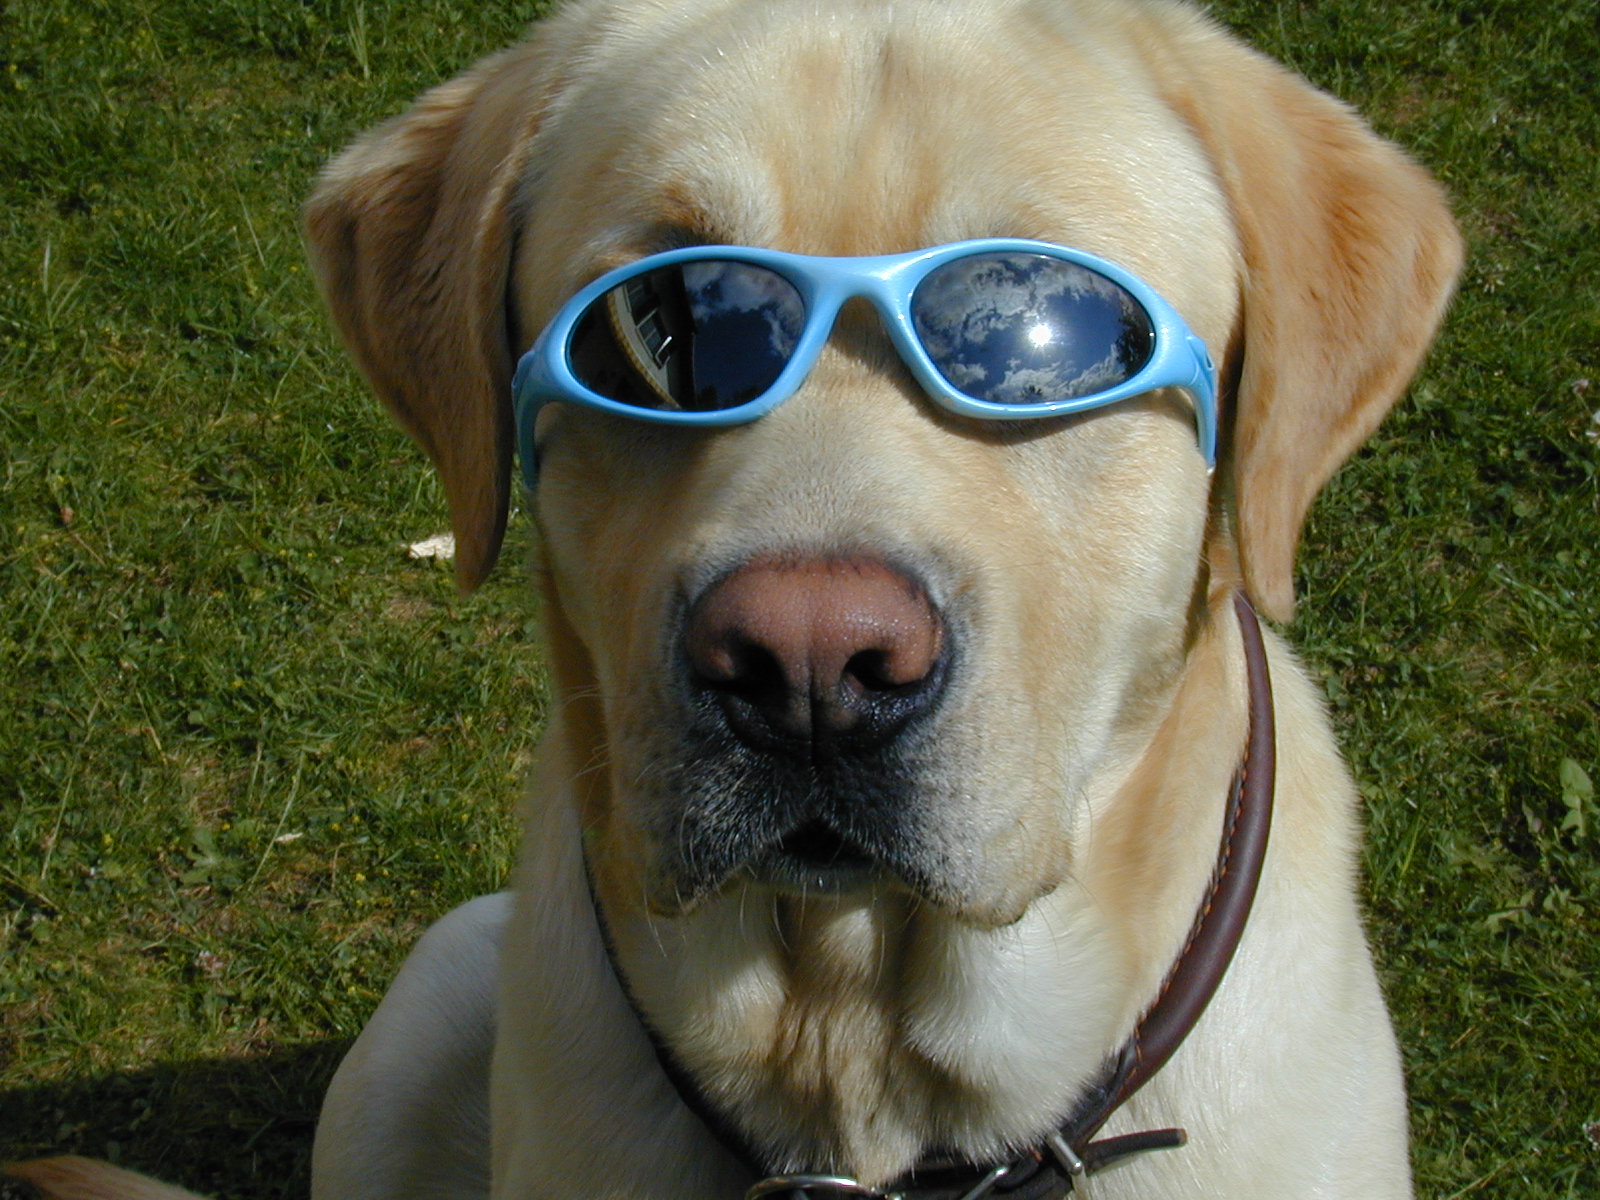 a close up of a dog wearing blue sunglasses